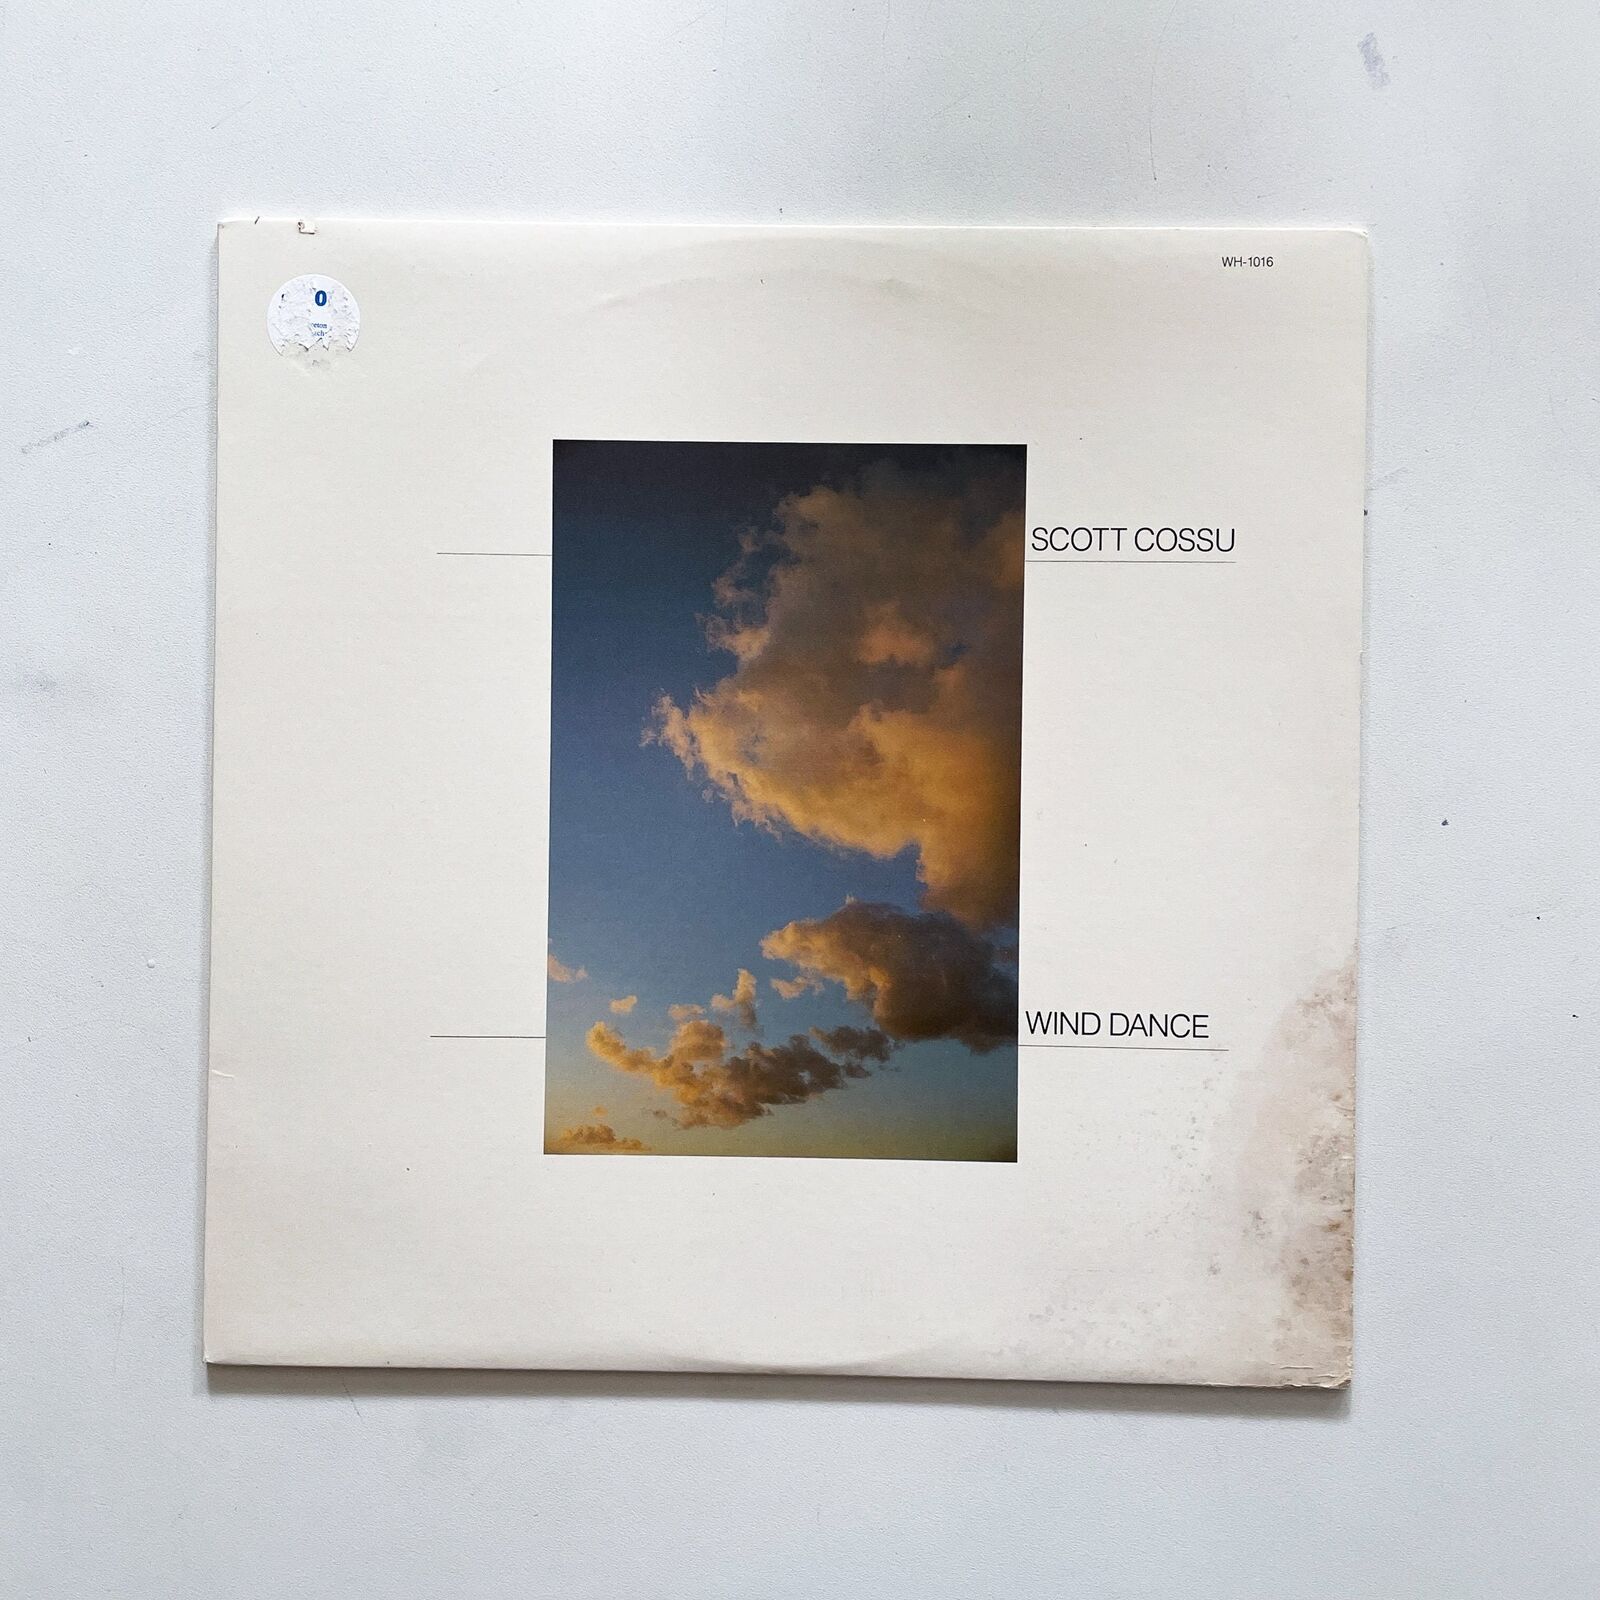 Scott Cossu - Wind Dance - Vinyl LP Record - 1983